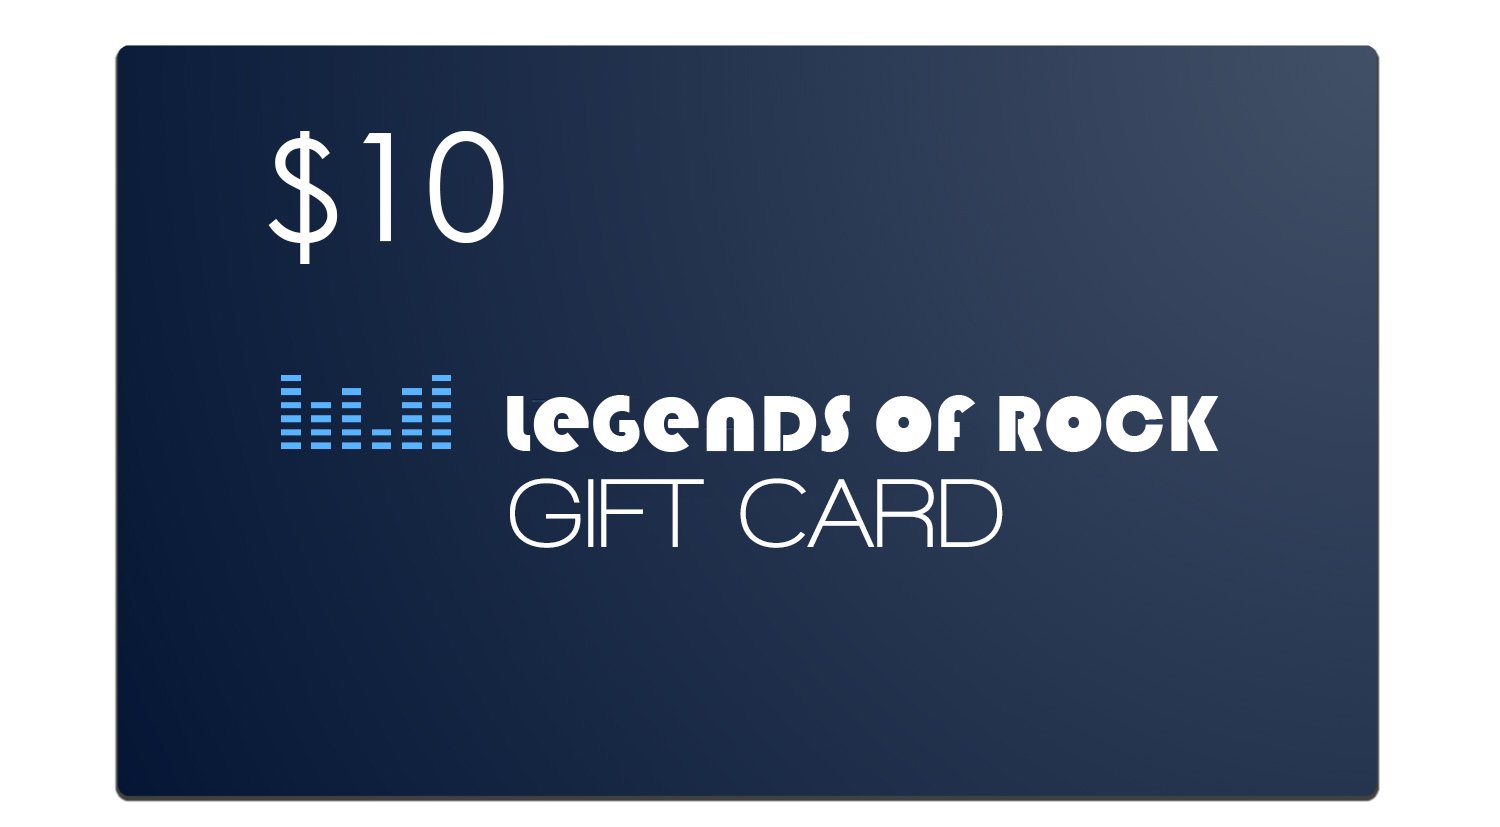 Legends Of Rock GIFT CARD